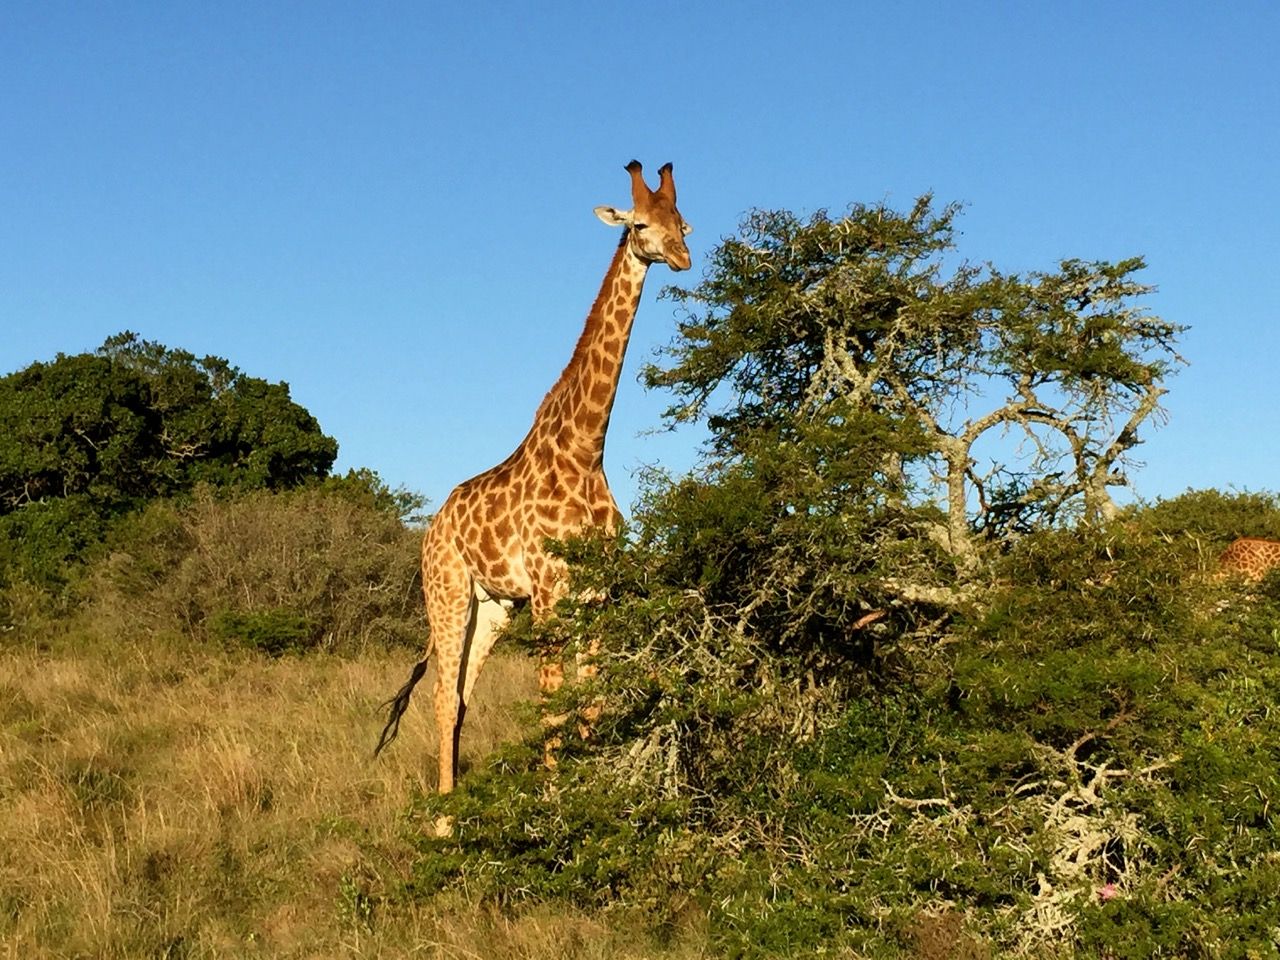 A giraffe grazing on a tree.